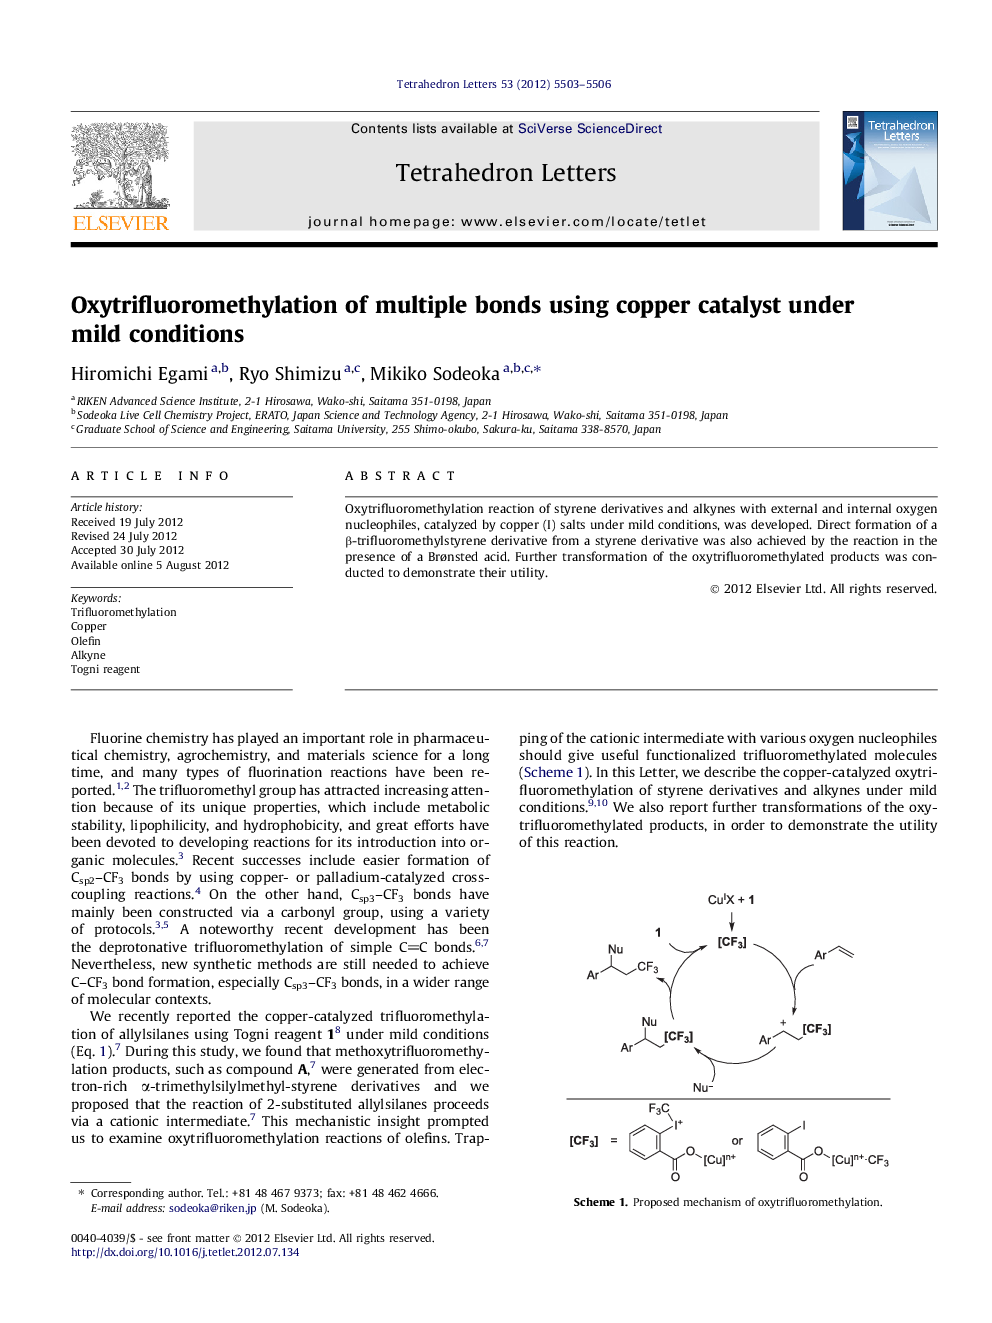 Oxytrifluoromethylation of multiple bonds using copper catalyst under mild conditions